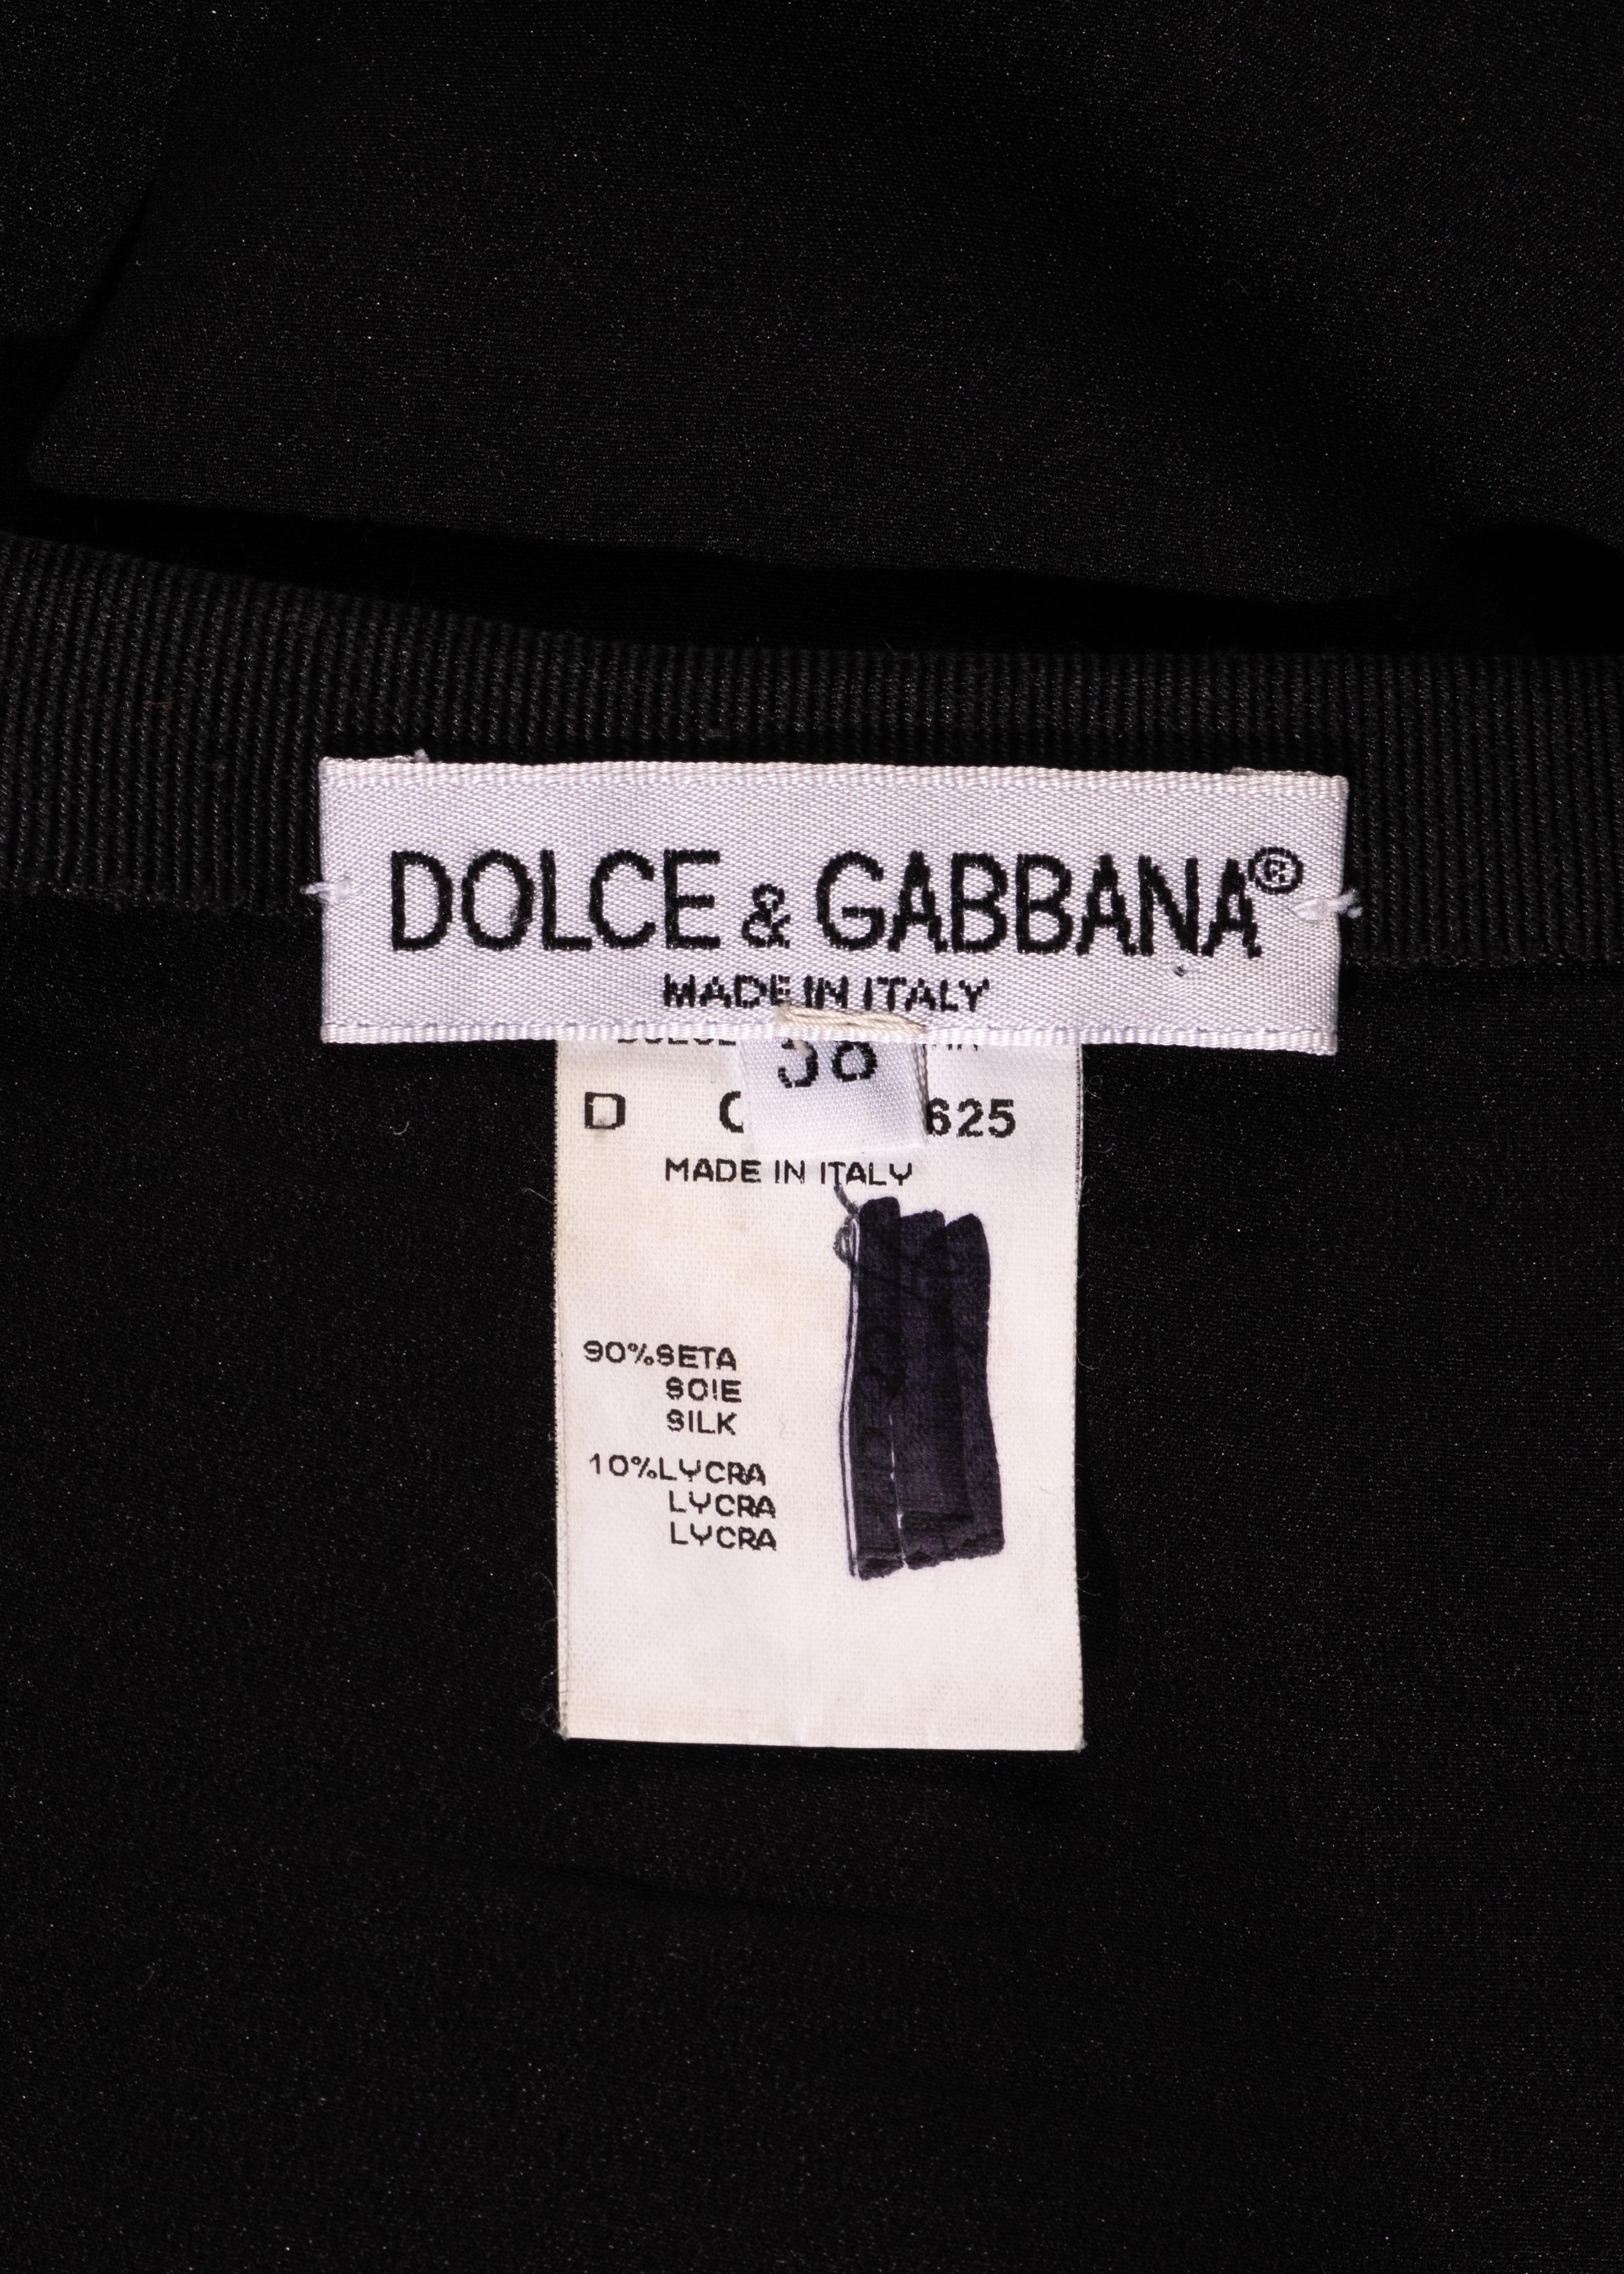 Dolce & Gabbana silk chiffon blouse and skirt pants set, ss 1998 For Sale 3